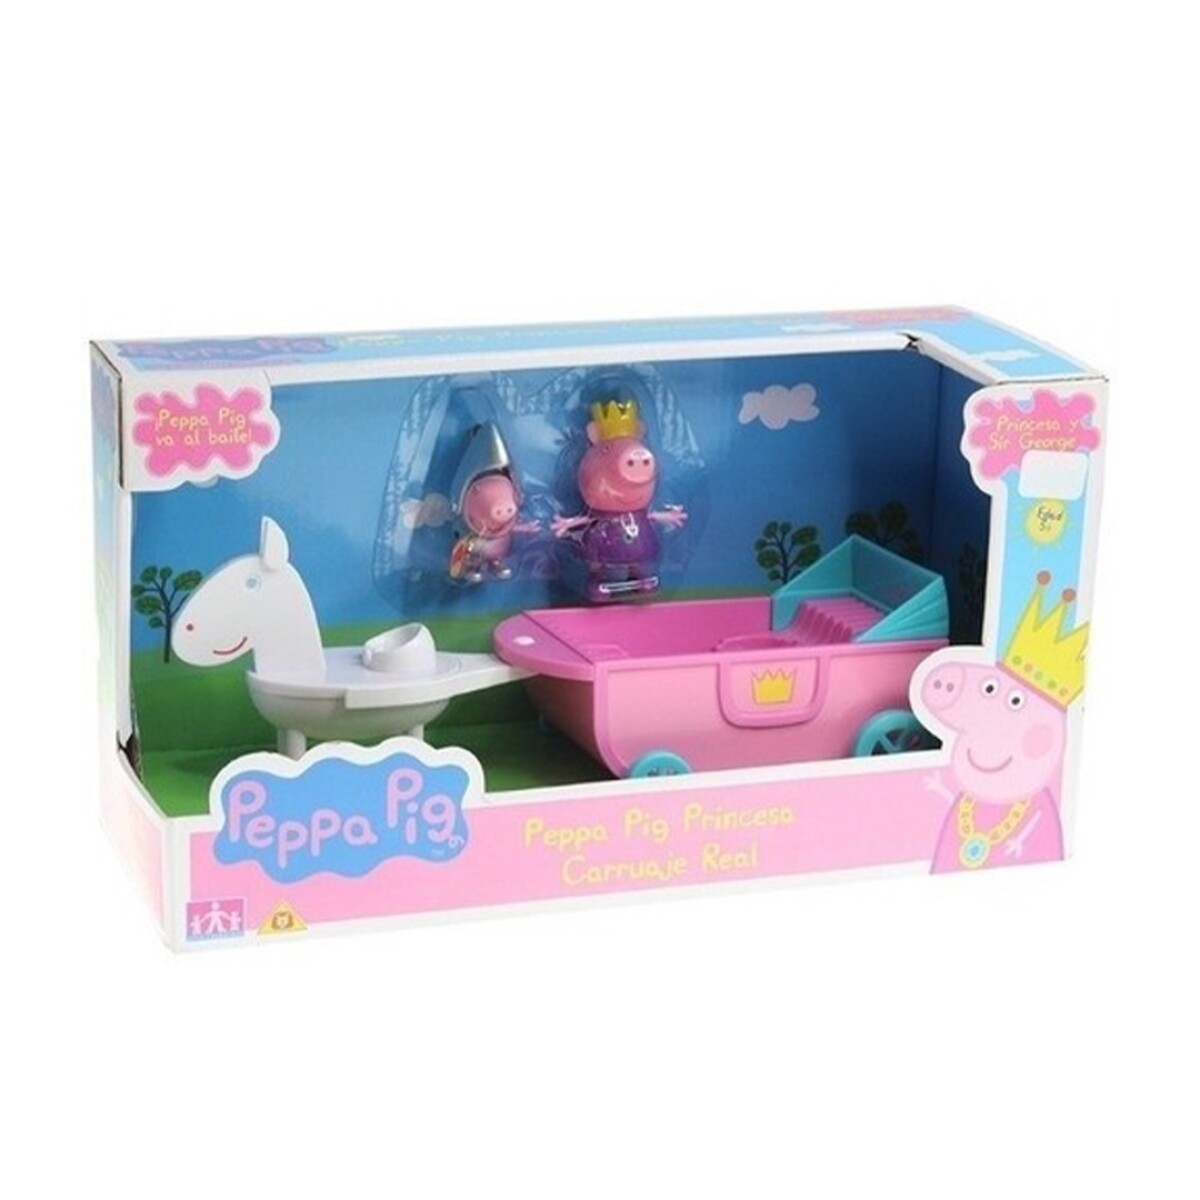 Figura Peppa Pig con Carruaje Princesas - 001 